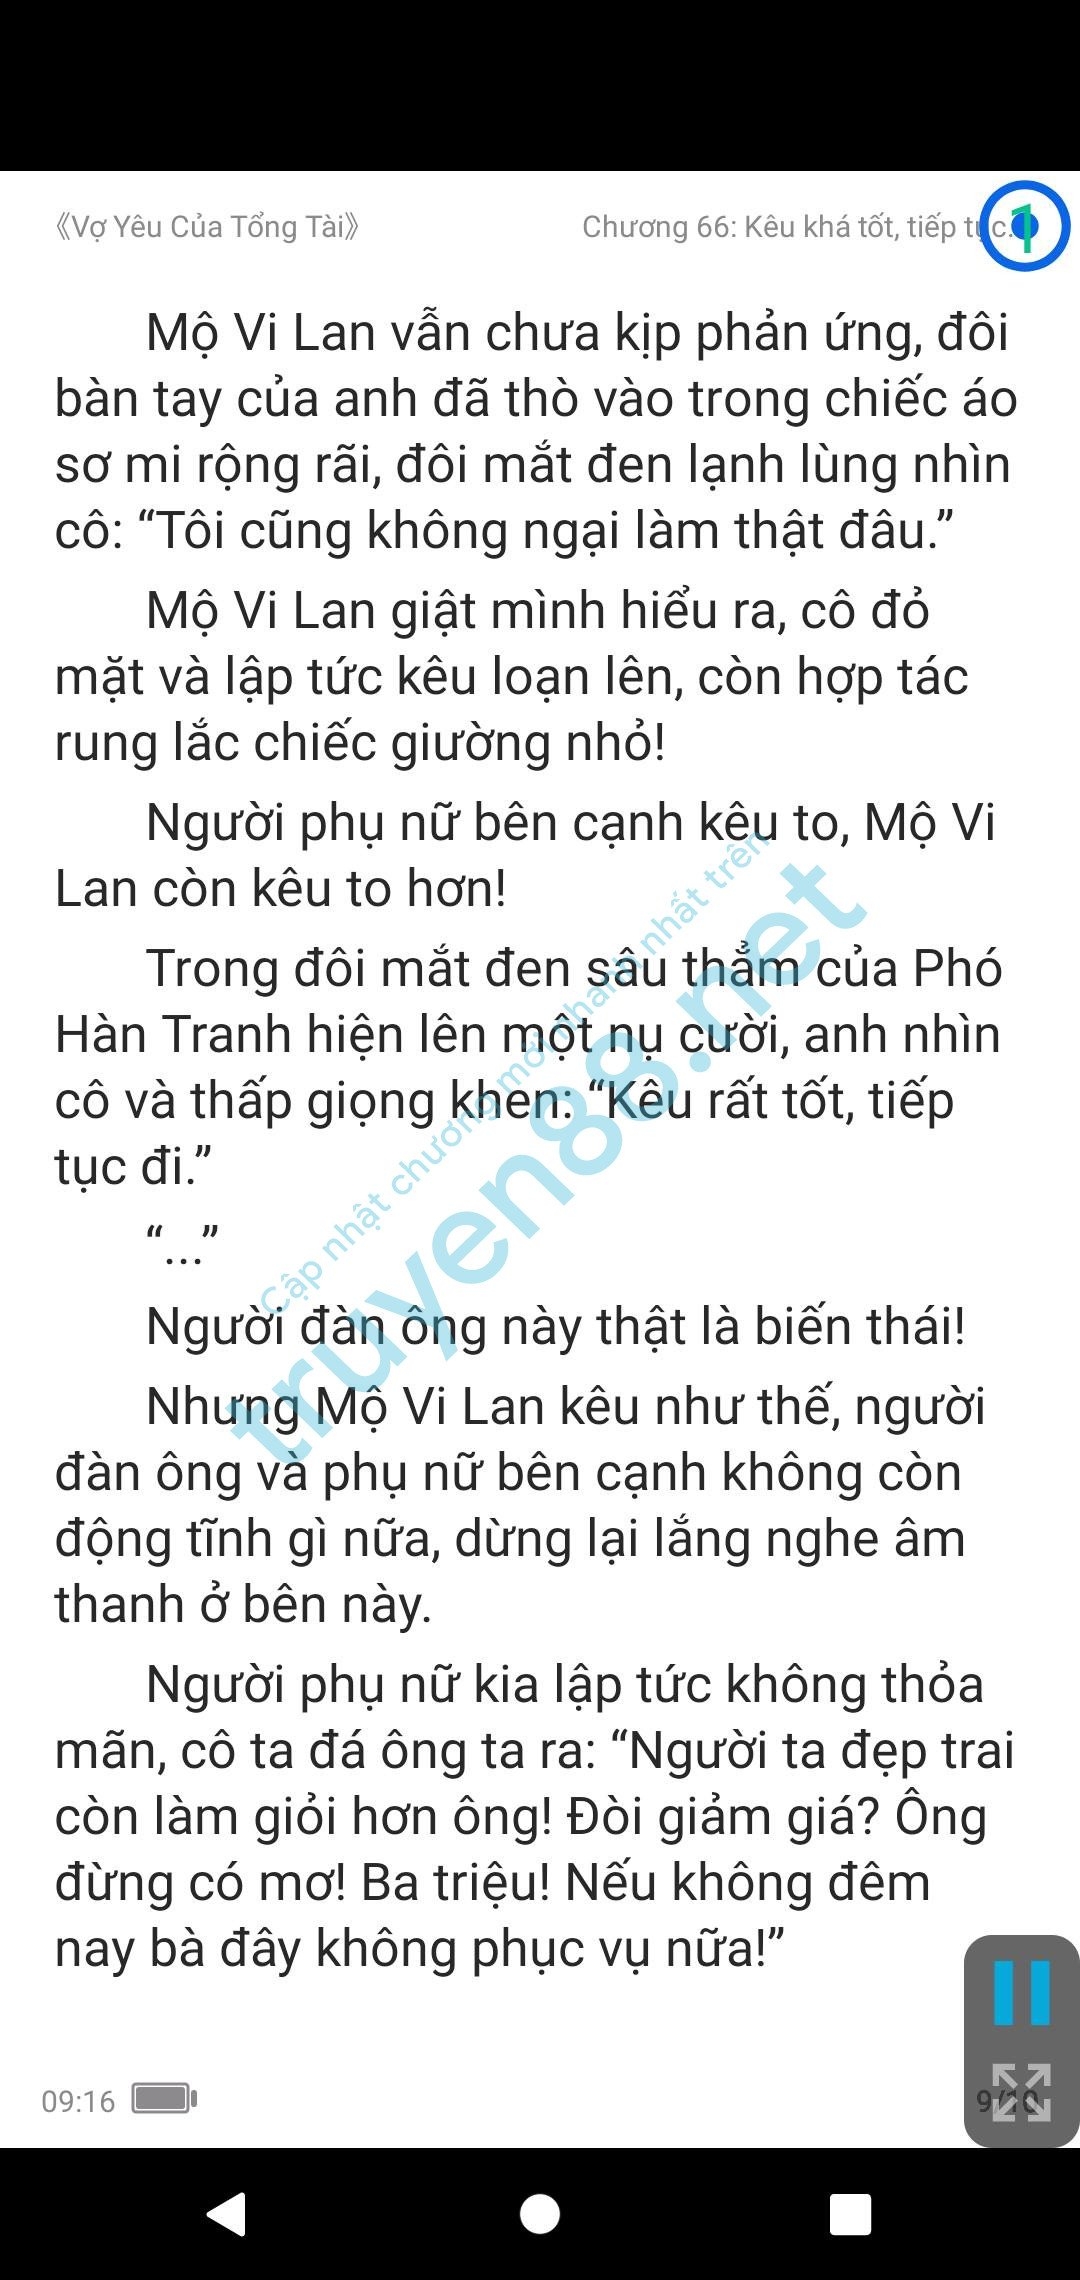 vo-yeu-cua-tong-tai-mo-vi-lan--pho-han-tranh-66-1